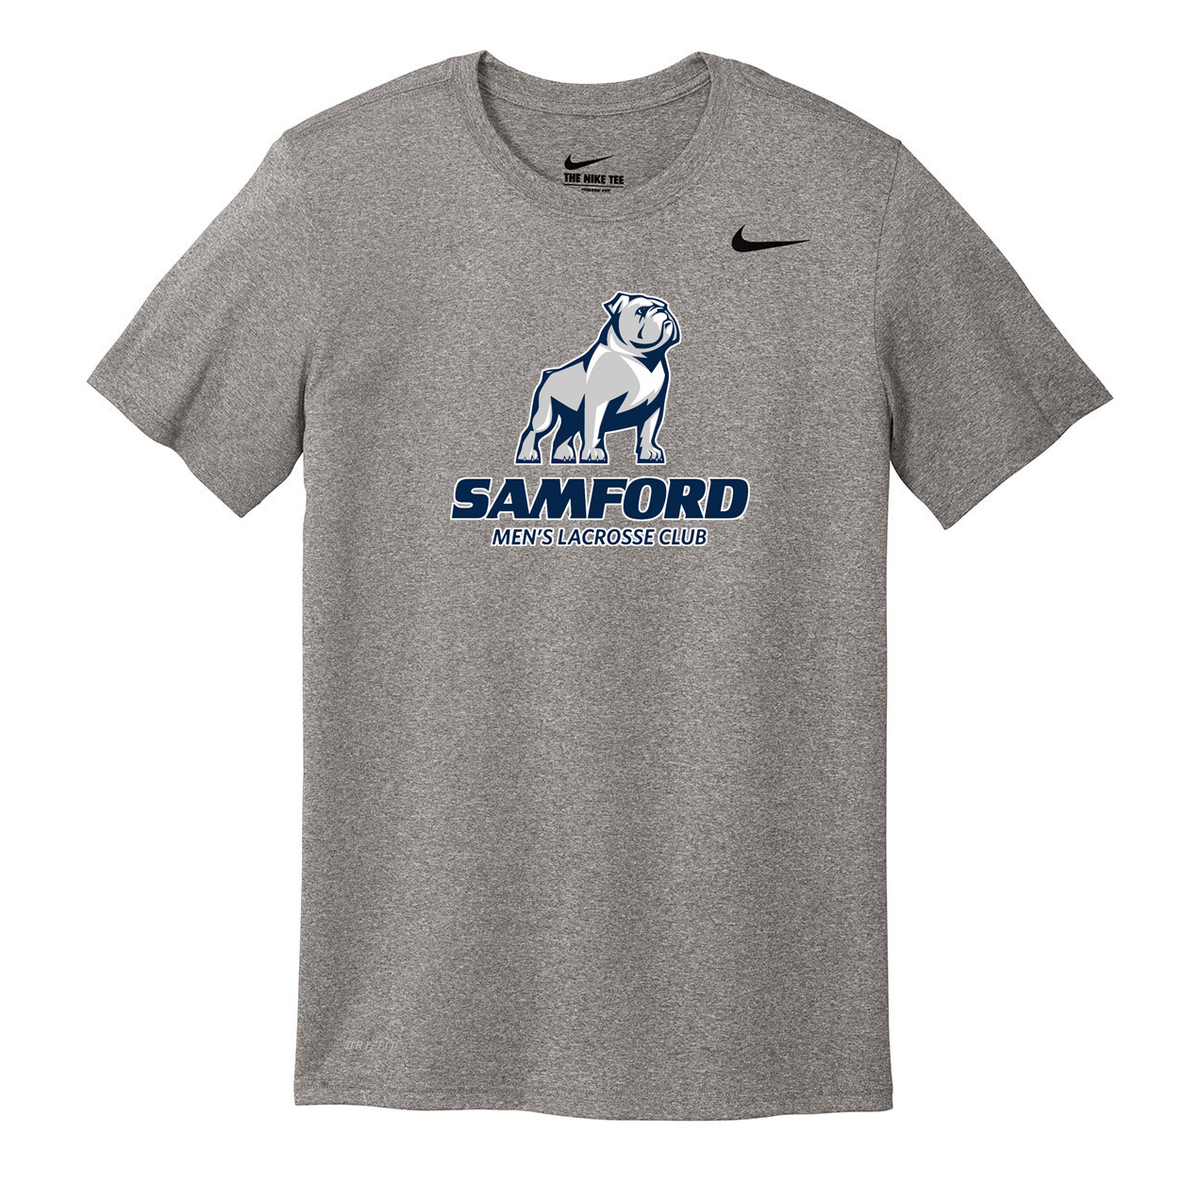 Samford University Lacrosse Club Nike Legend Tee